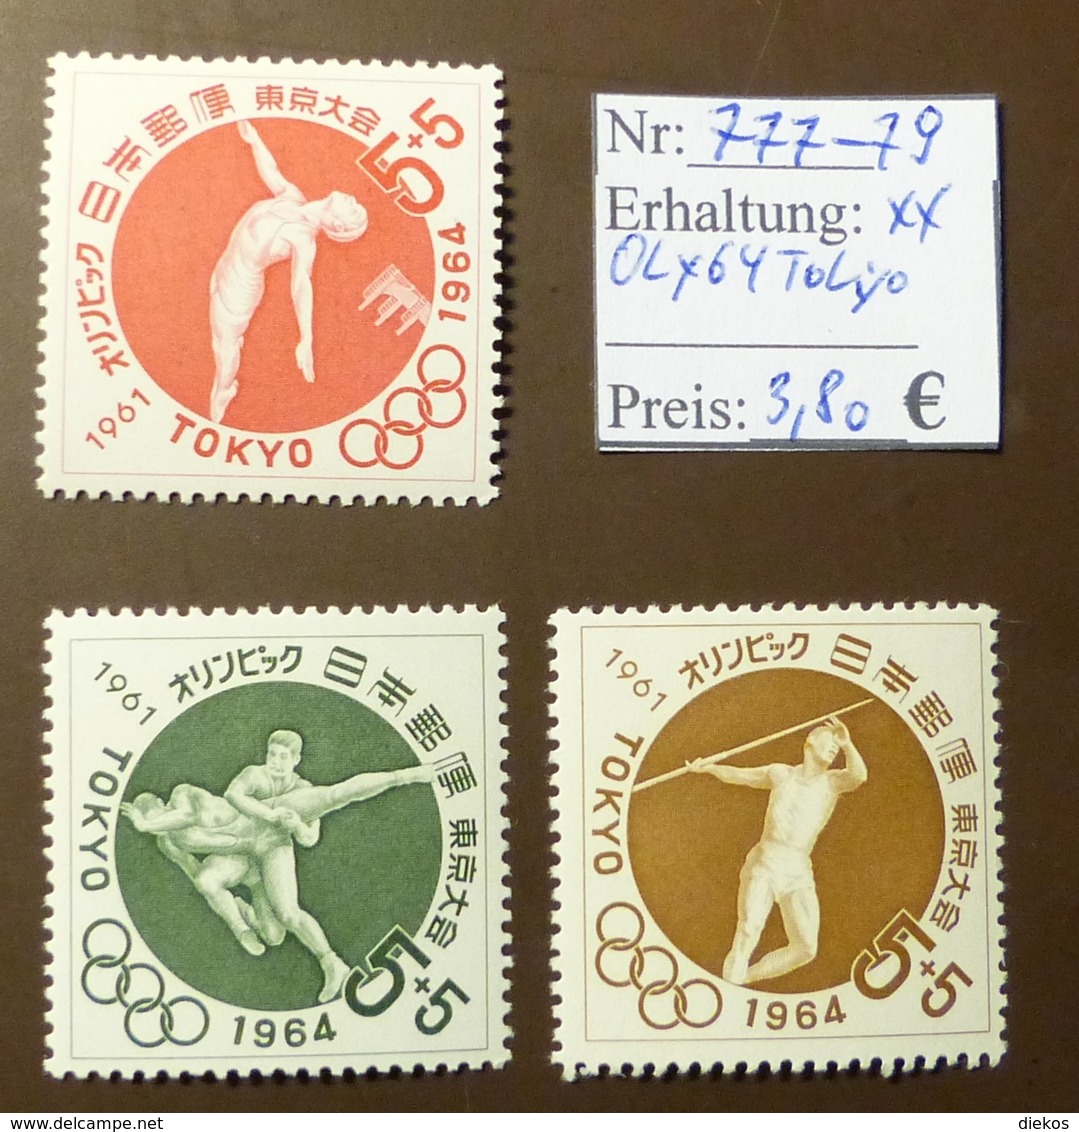 Japan Olympia 1964  MiNr: 777-79  Postfrisch ** MNH     #4910 - Estate 1964: Tokio